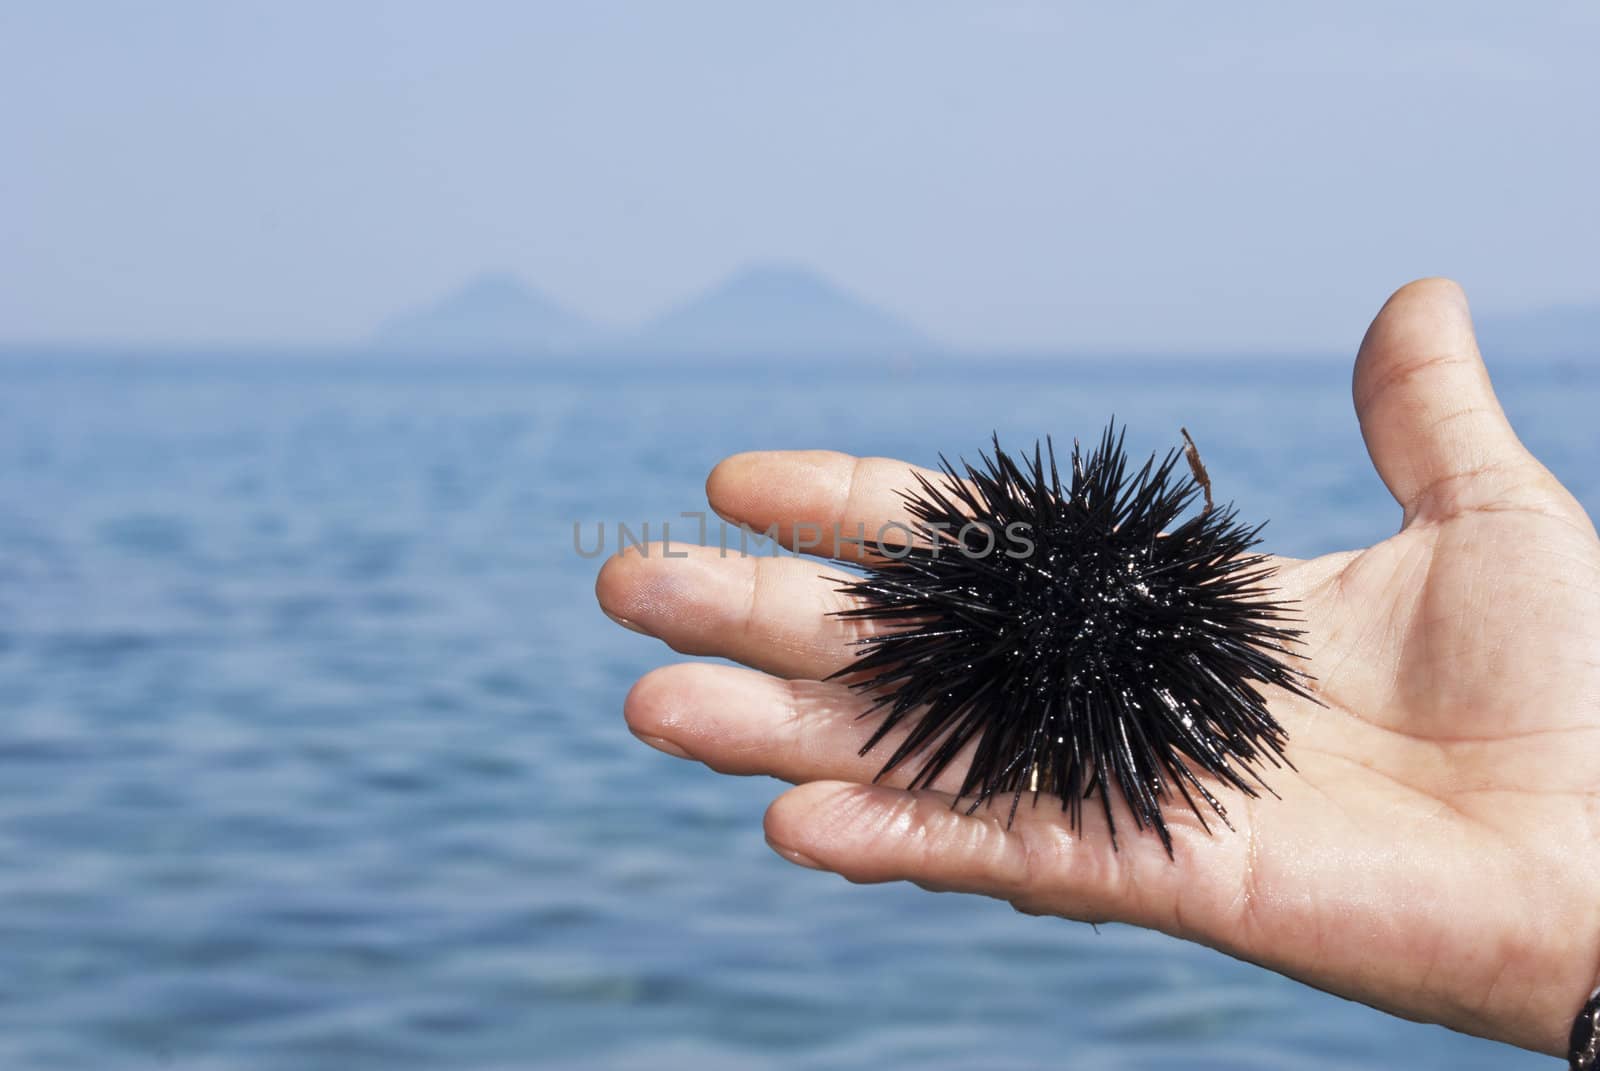 sea urchin on hand of man by gandolfocannatella